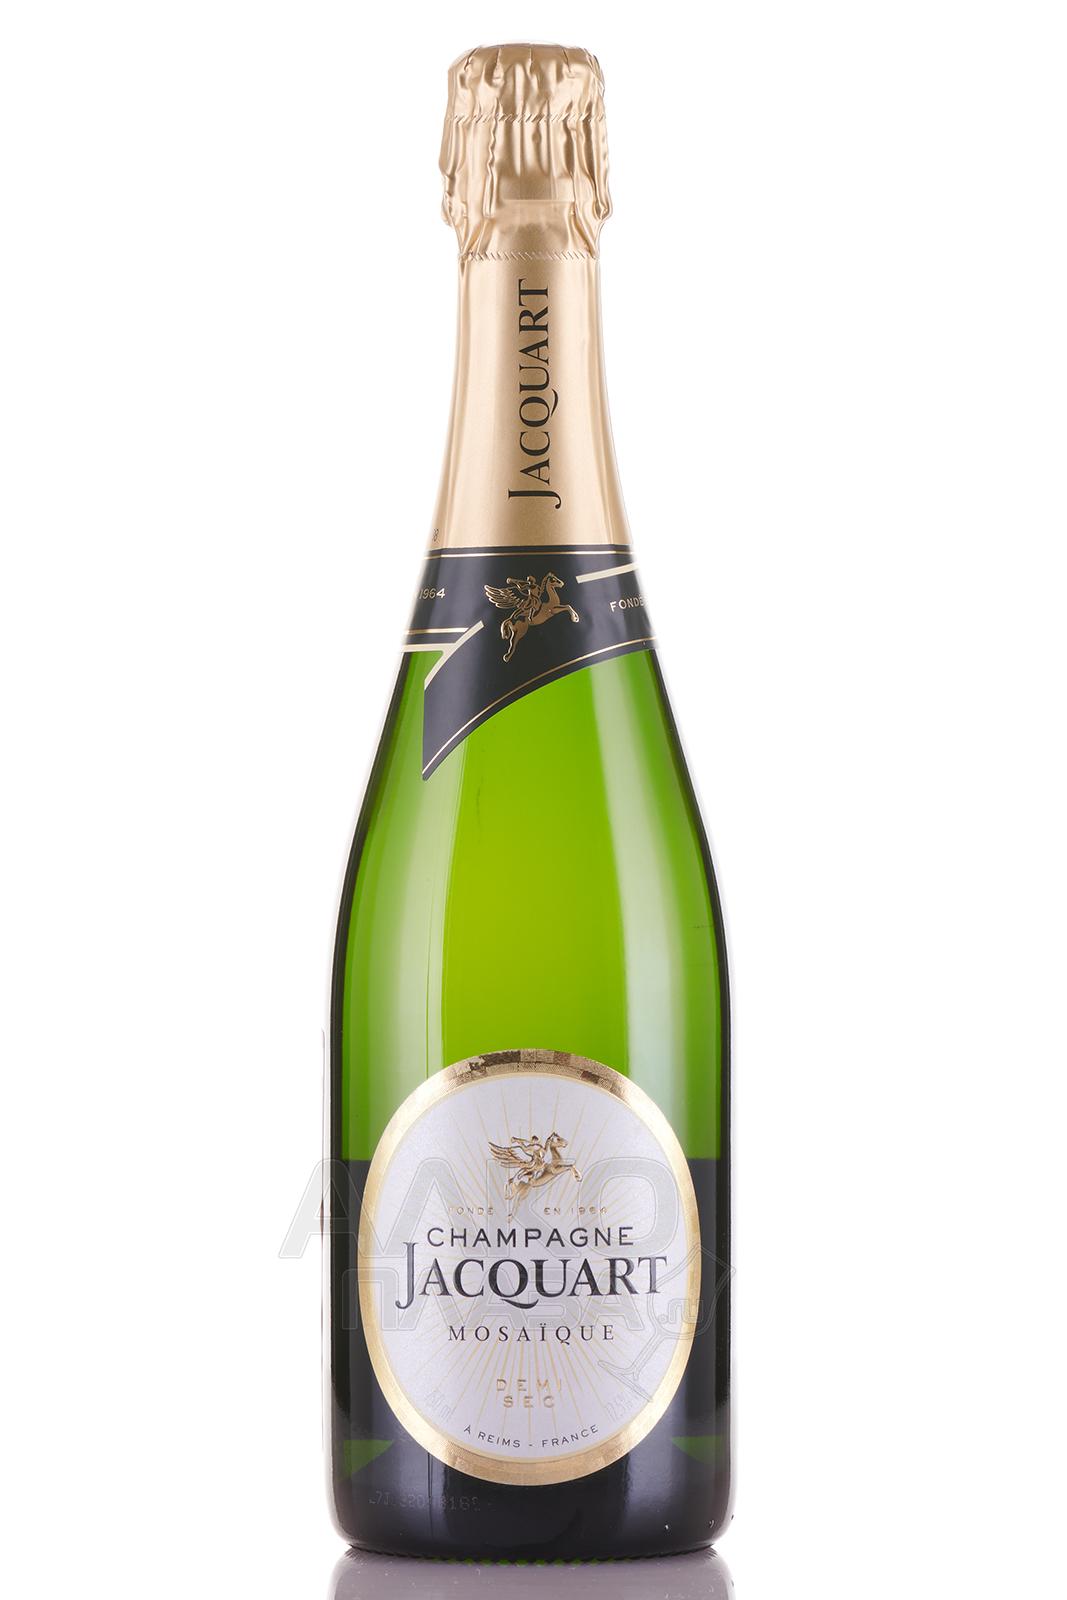 Champagne Jacquart Demi-Sec Mosaique - шампанское Жакарт Деми-Сек Мозаик 0.75 л